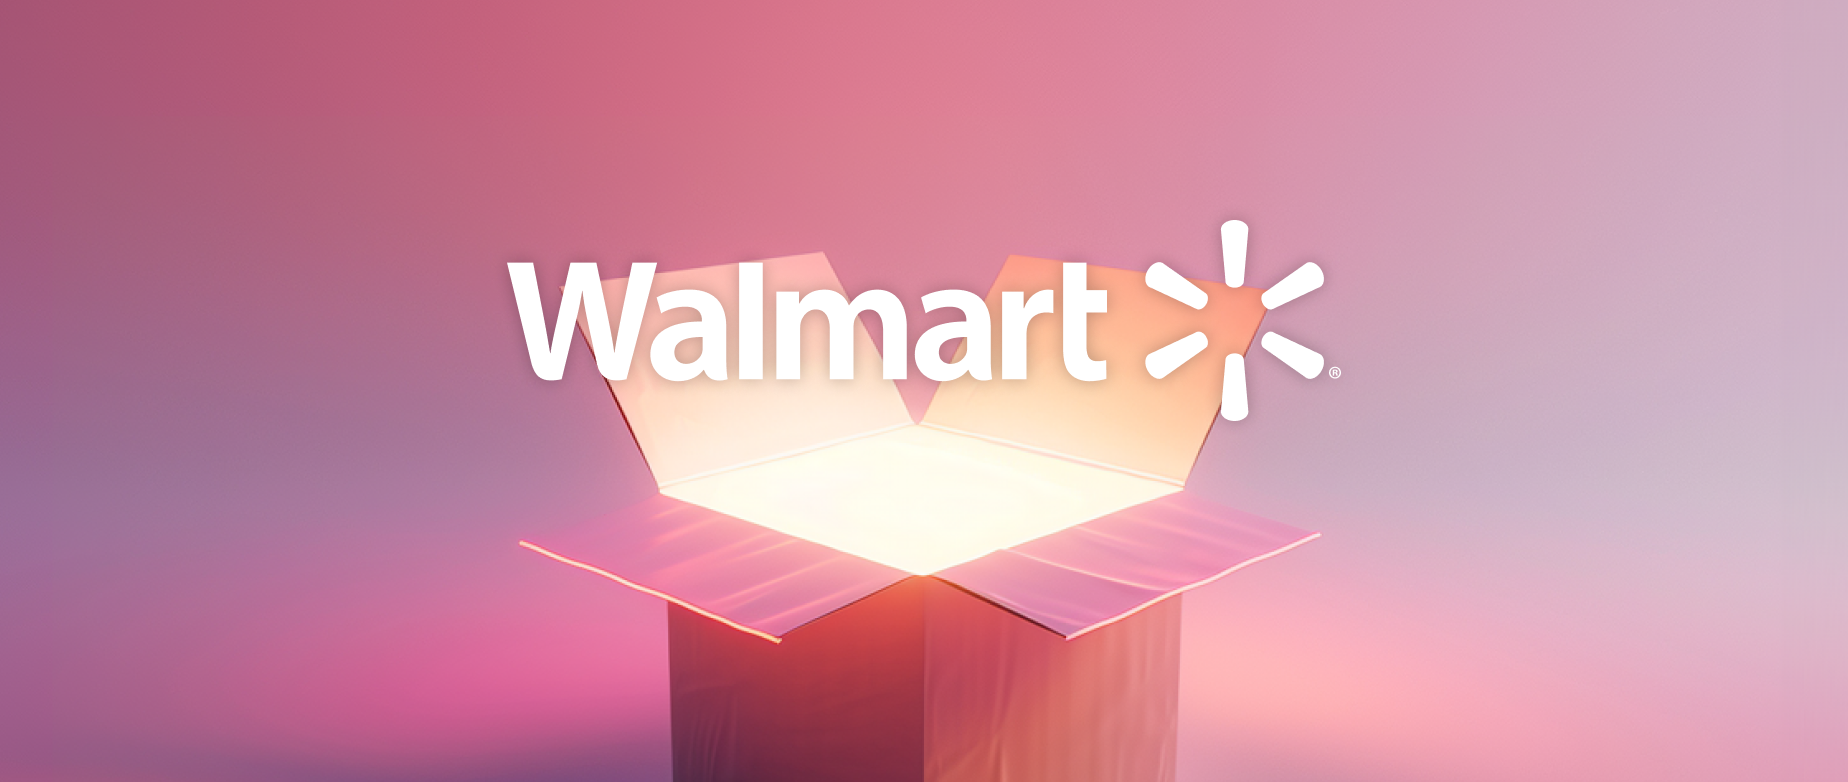 The Walmart logo rises from a cardboard shipping box, representing dropshipping on Walmart.